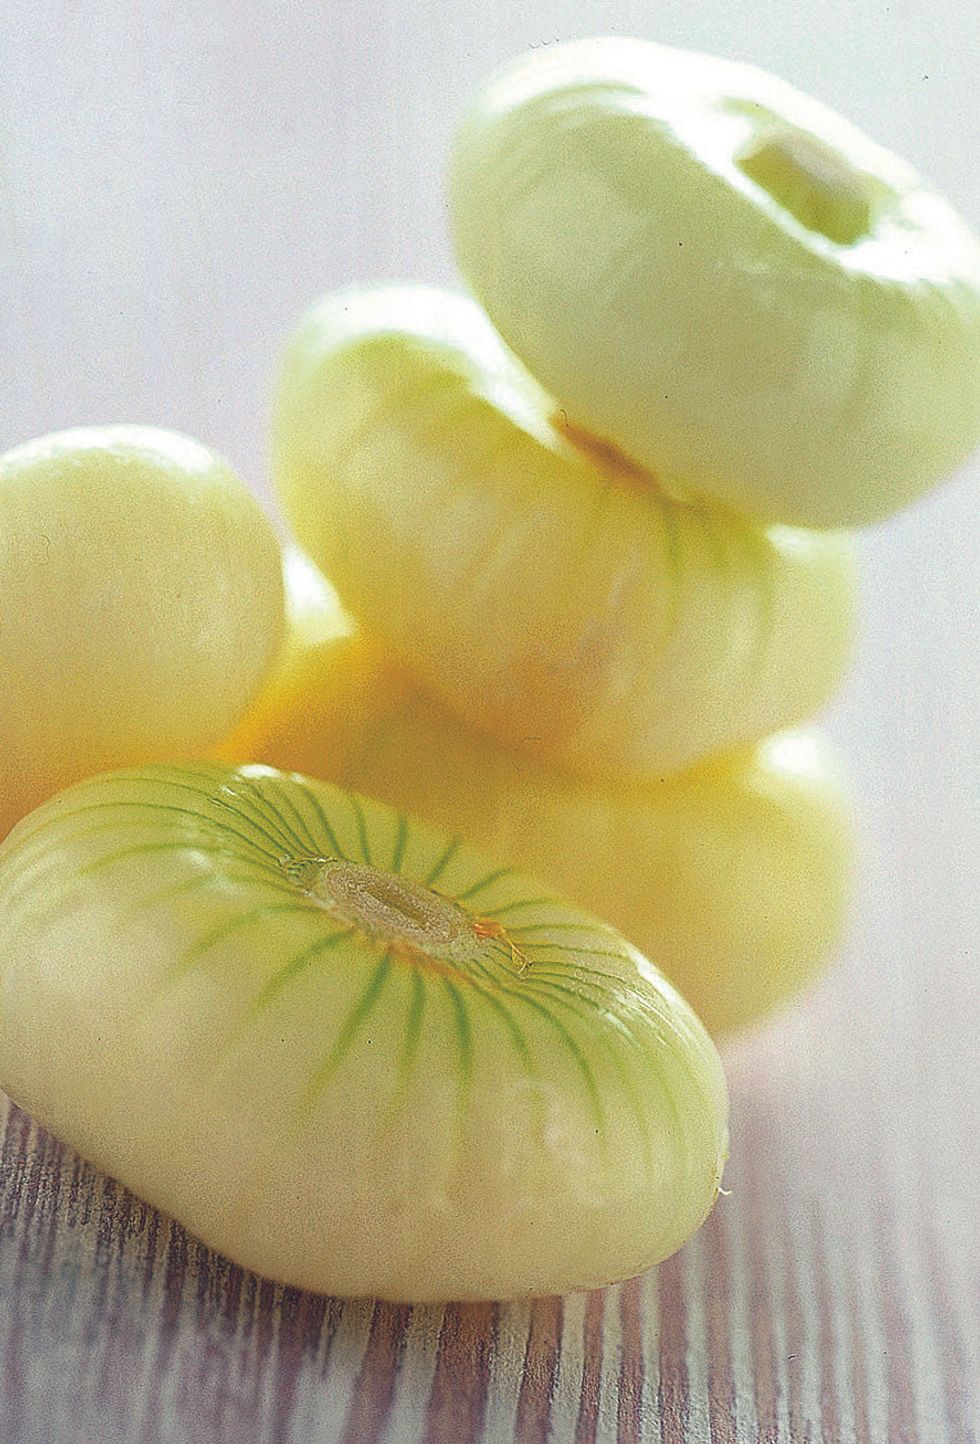 Borettana onion